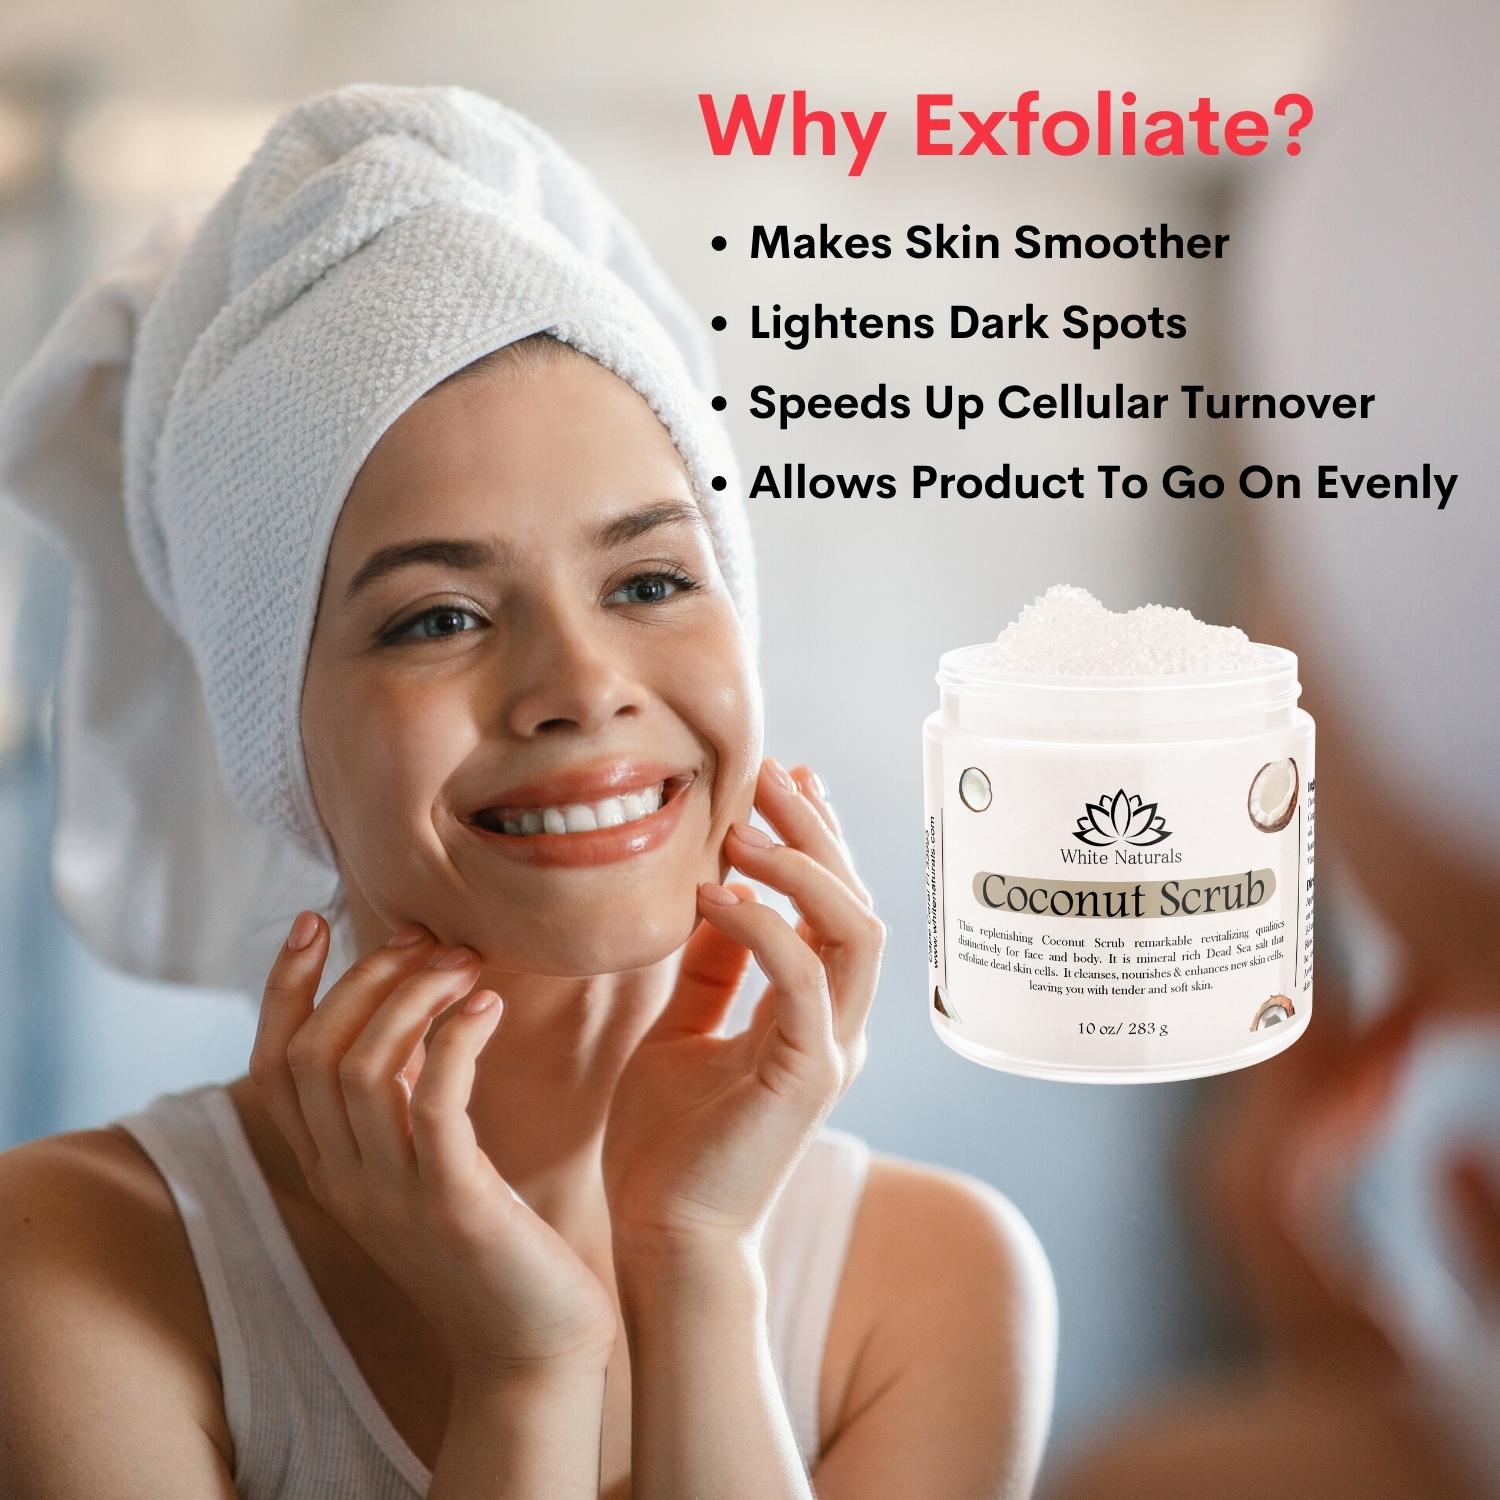 Reasons You Should Exfoliate Your Skin